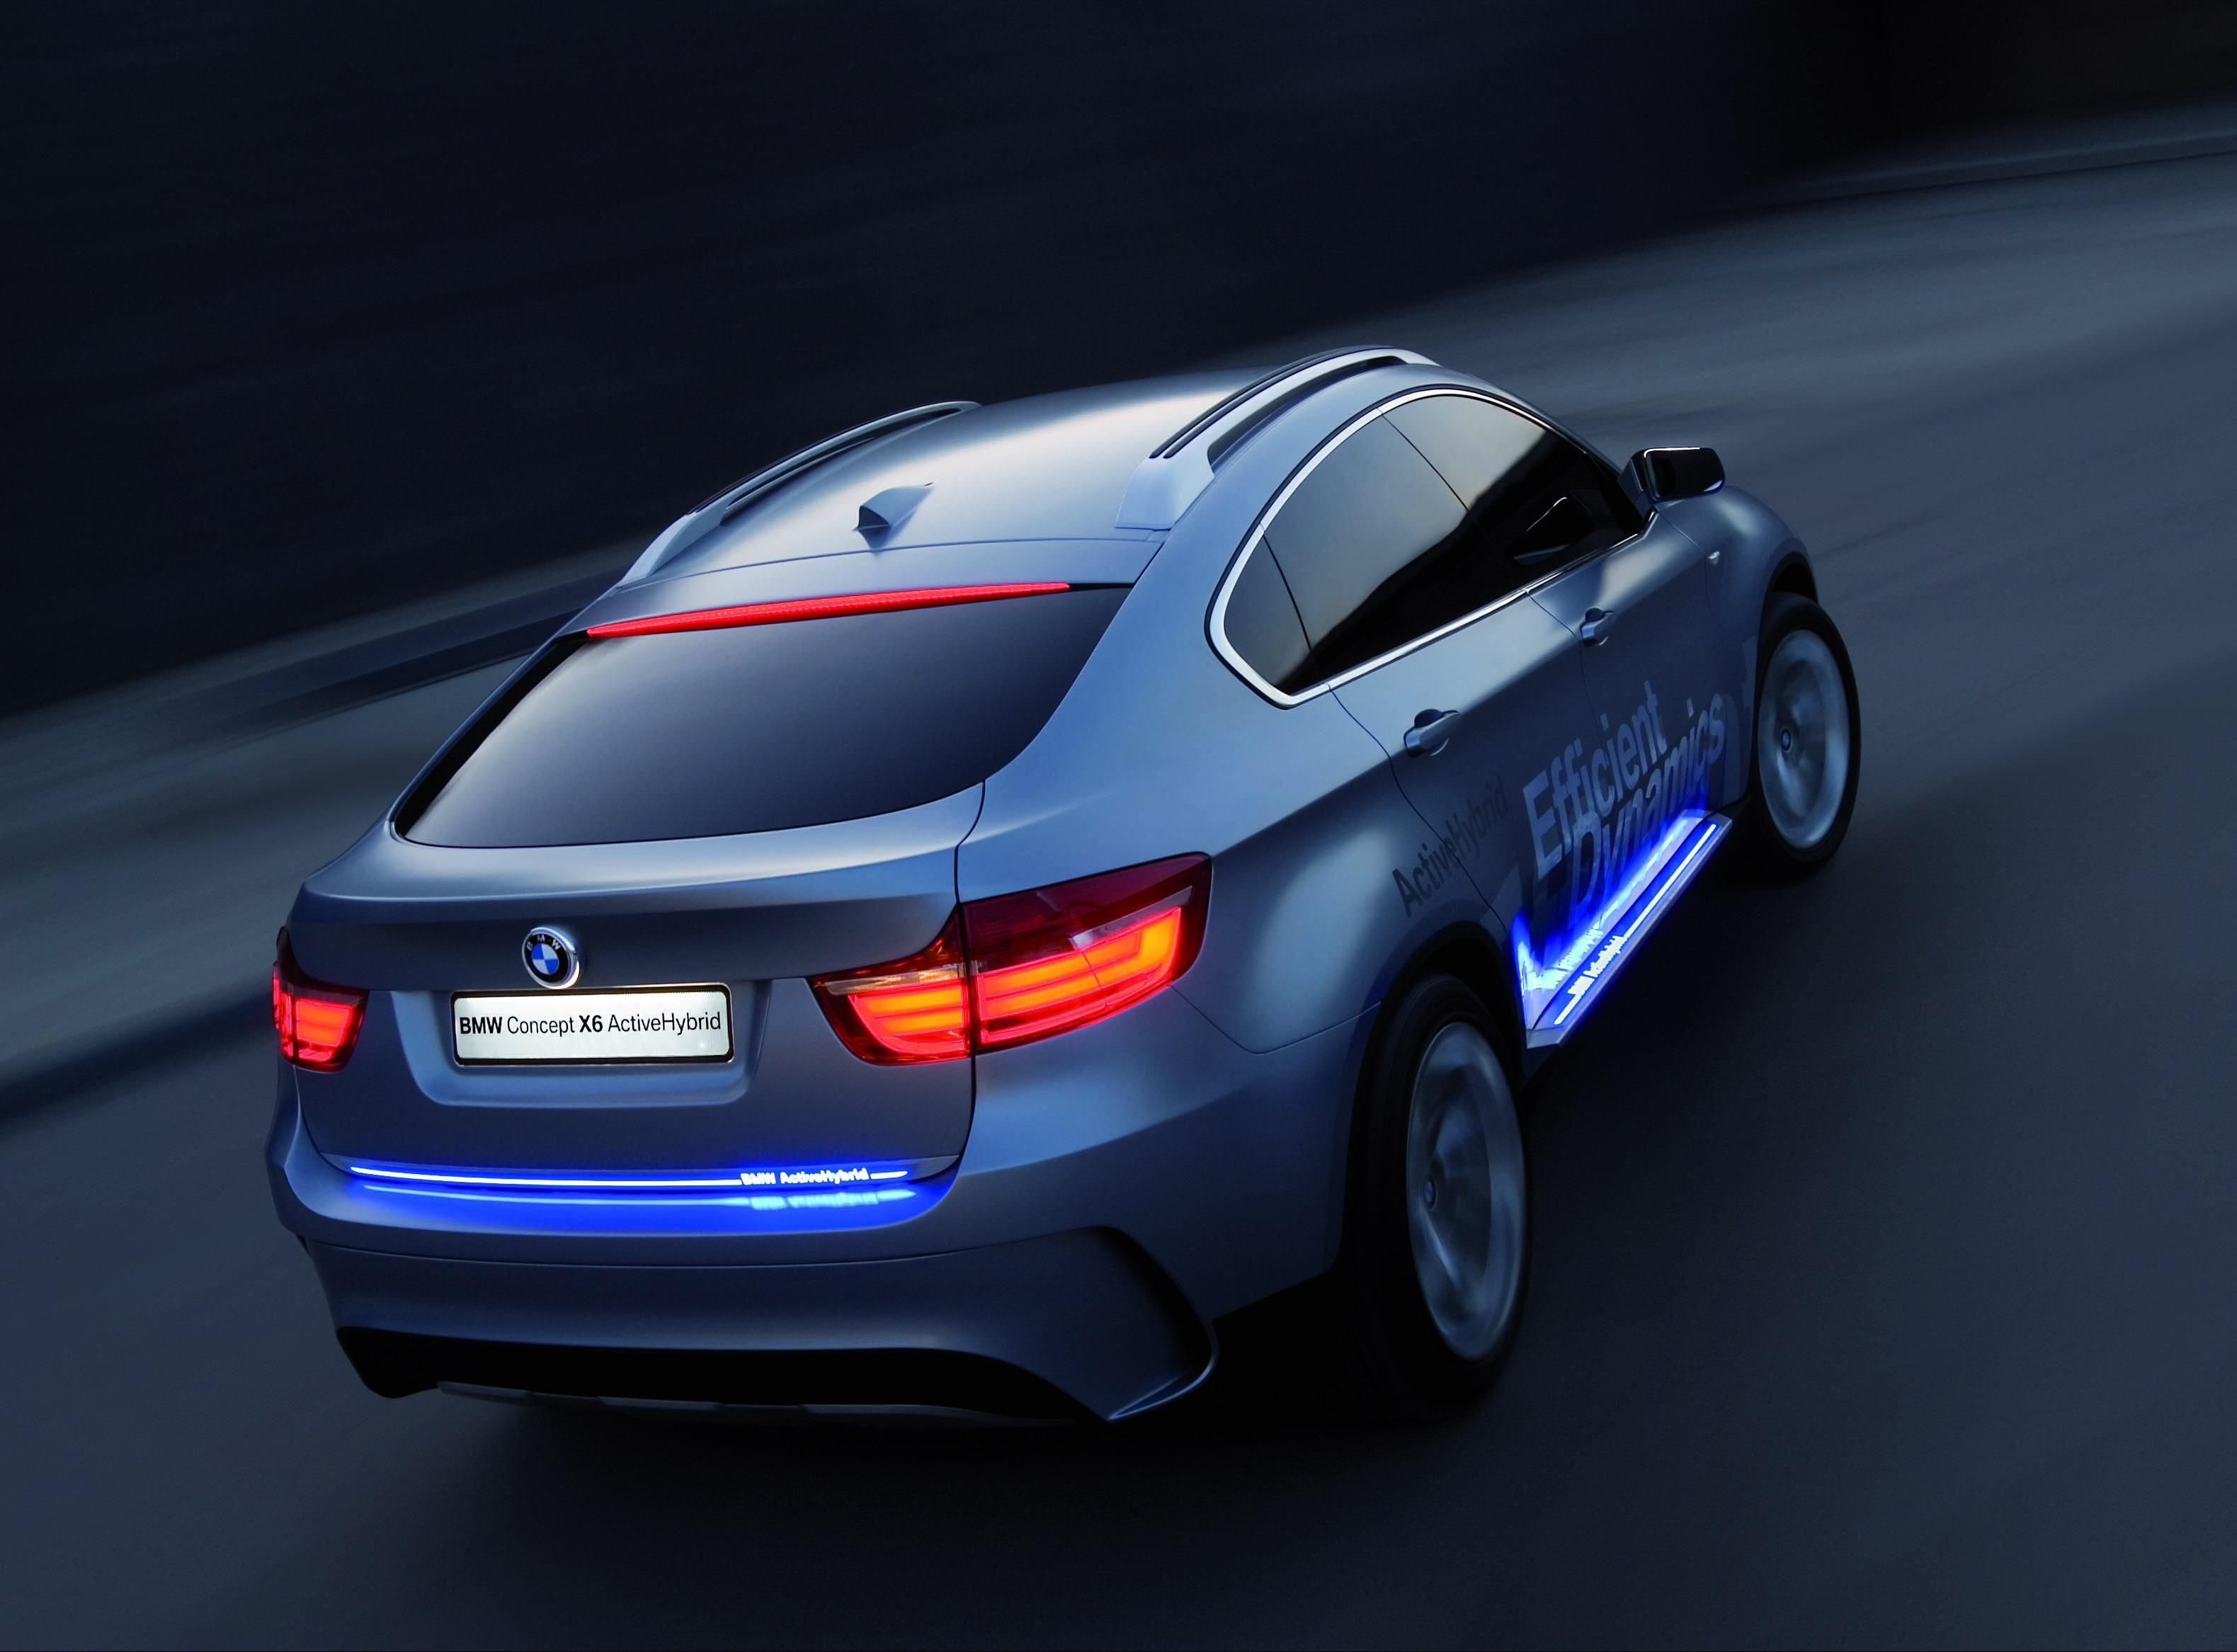 2008 BMW Concept X6 ActiveHybrid